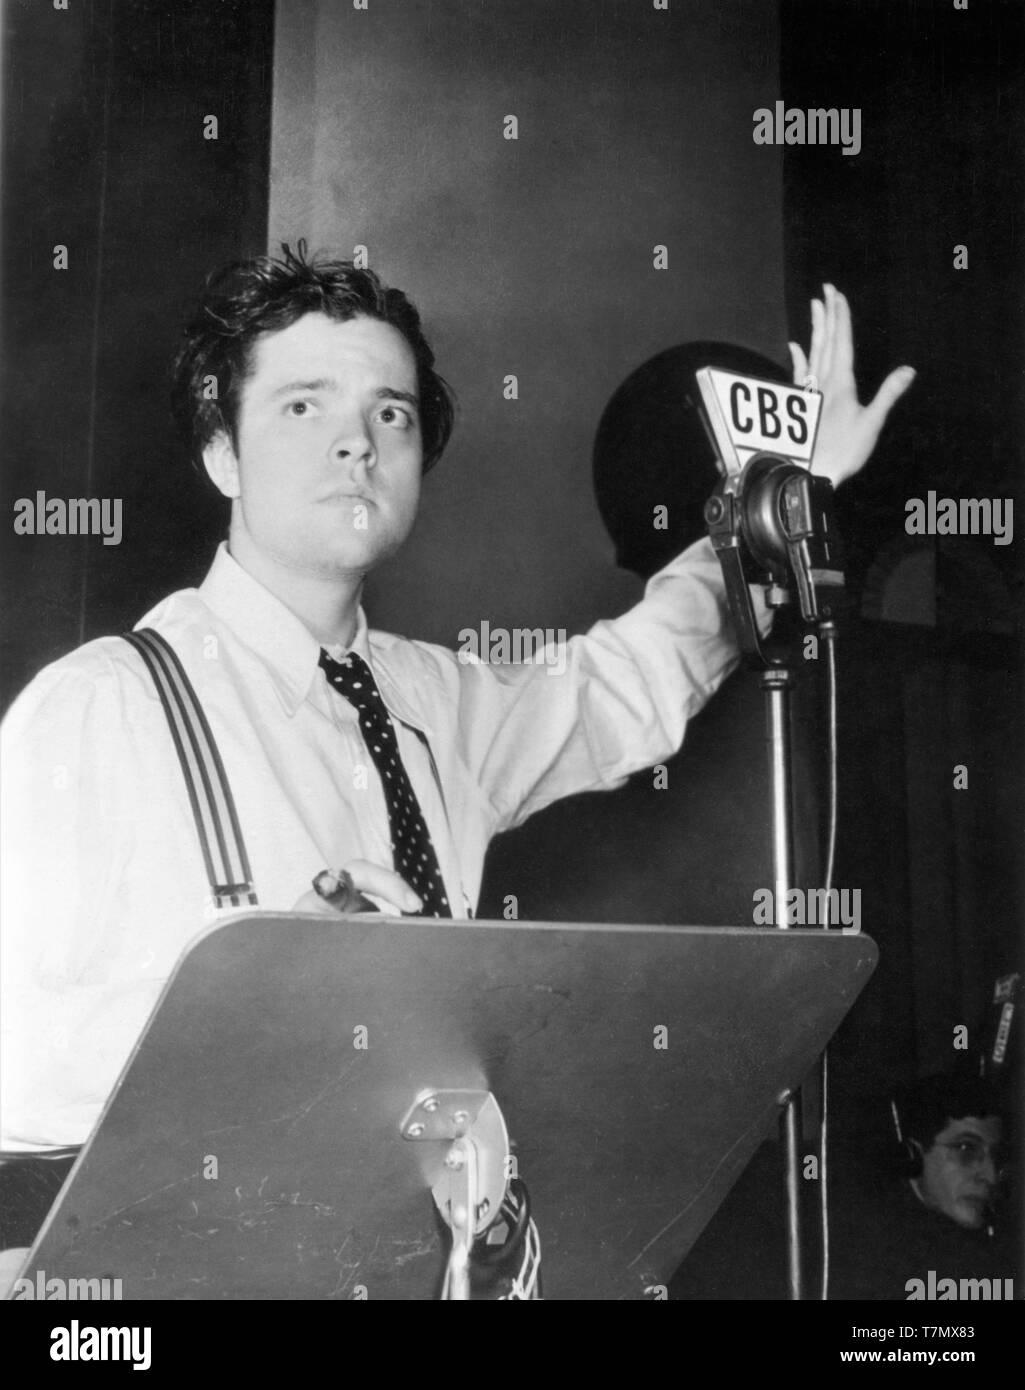 ORSON WELLES BERNARD HERRMANN 1938 CBS radio broadcast at microphone ...